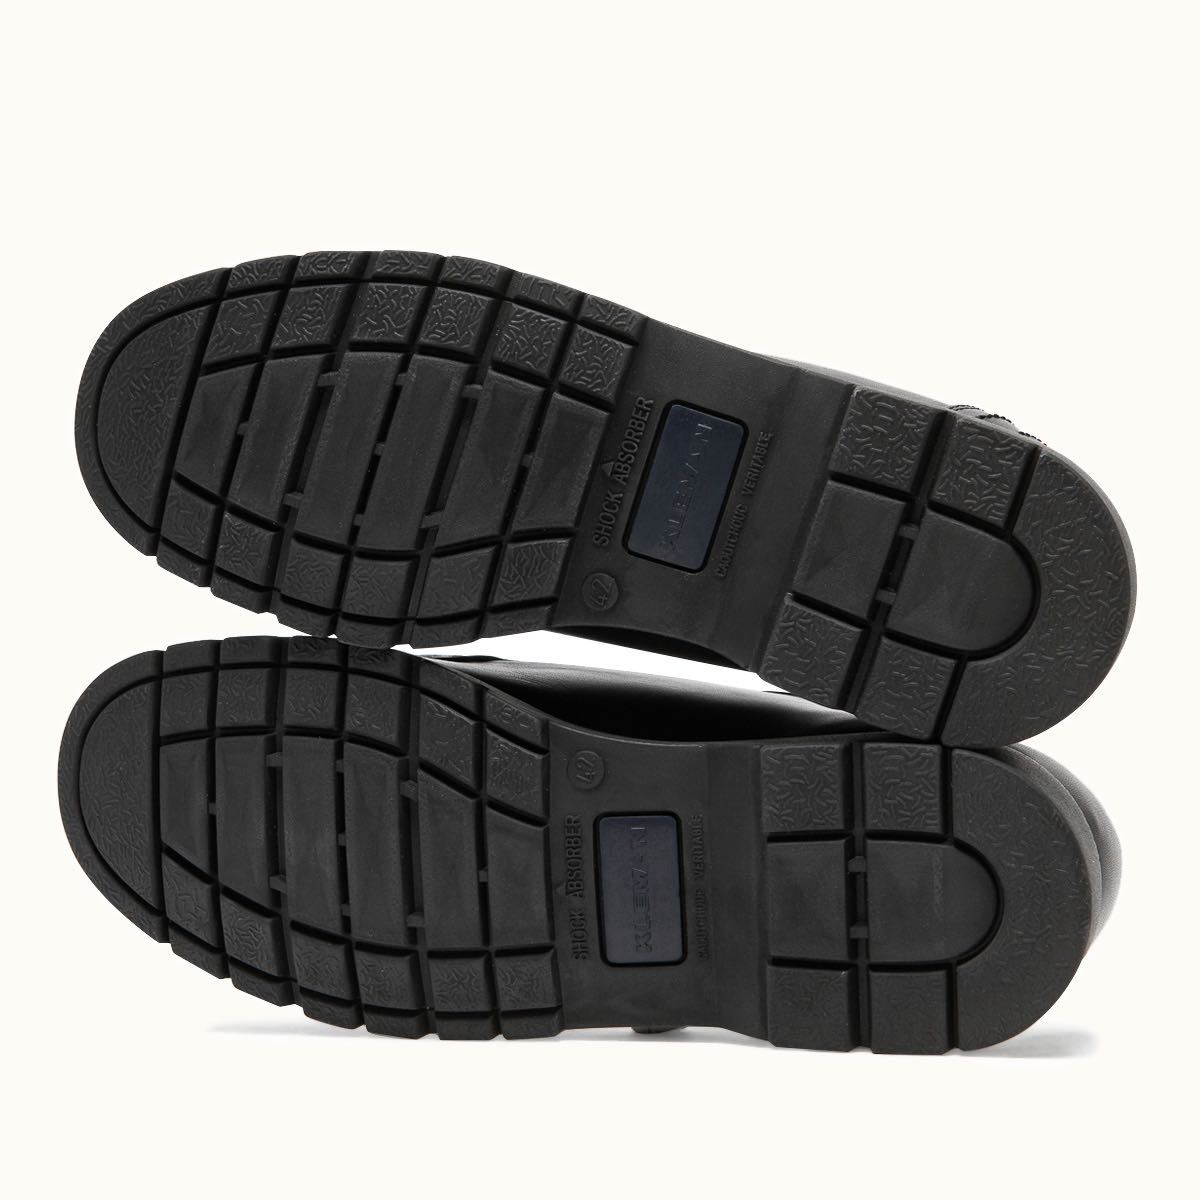 KLEMANkre man PADRORpa gong -padore moccasin black men's men's shoes 39